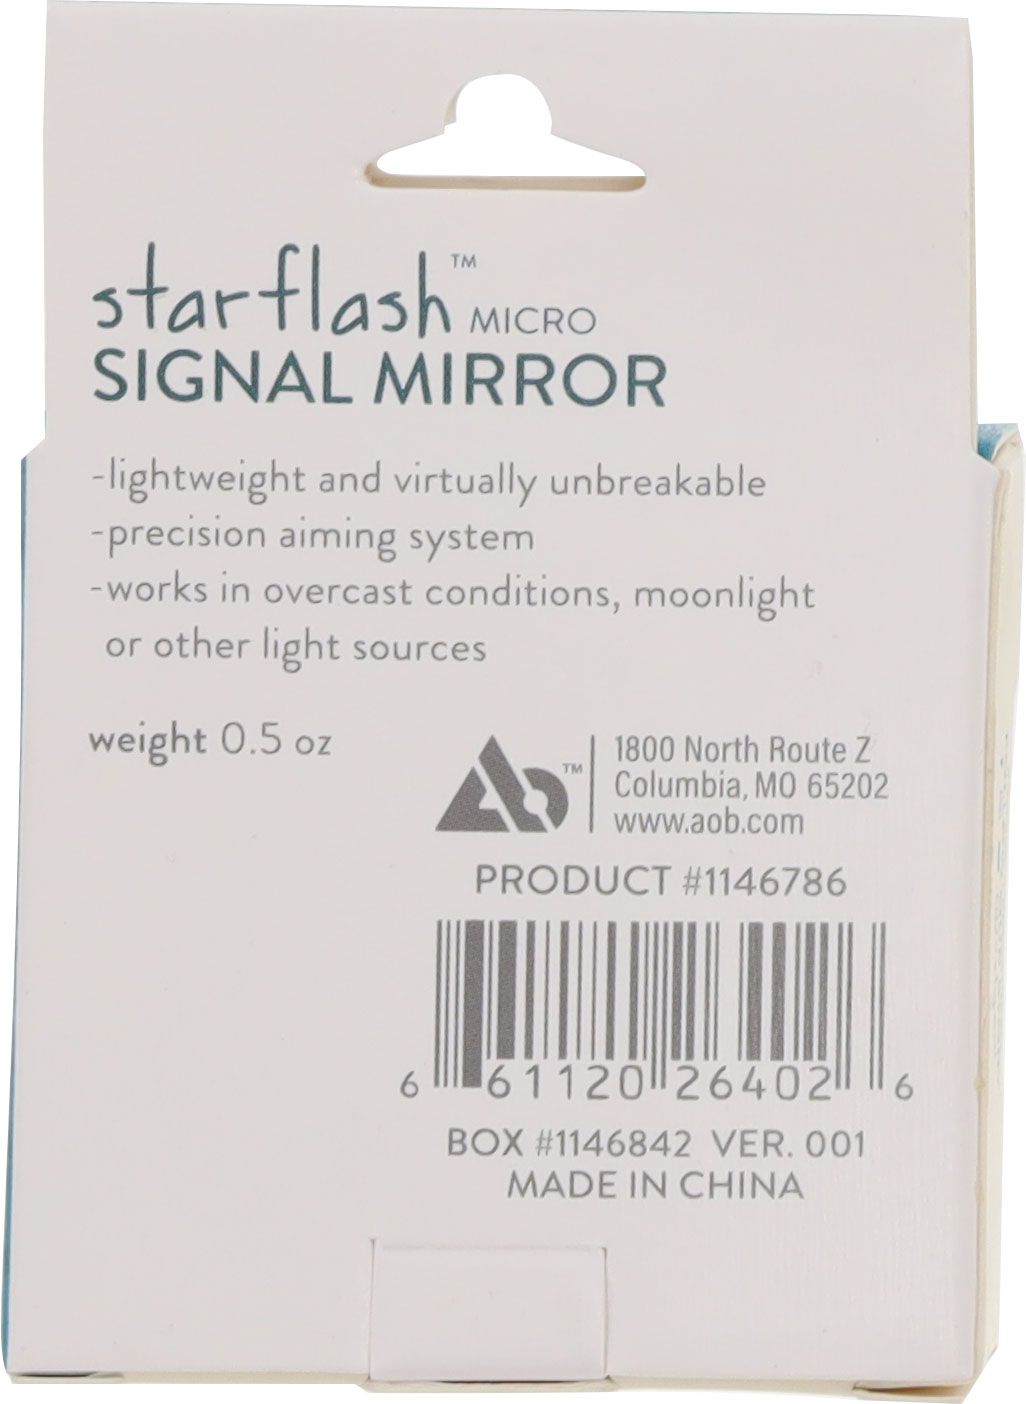 Survival Resources > Signaling > StarFlash Signal Mirror